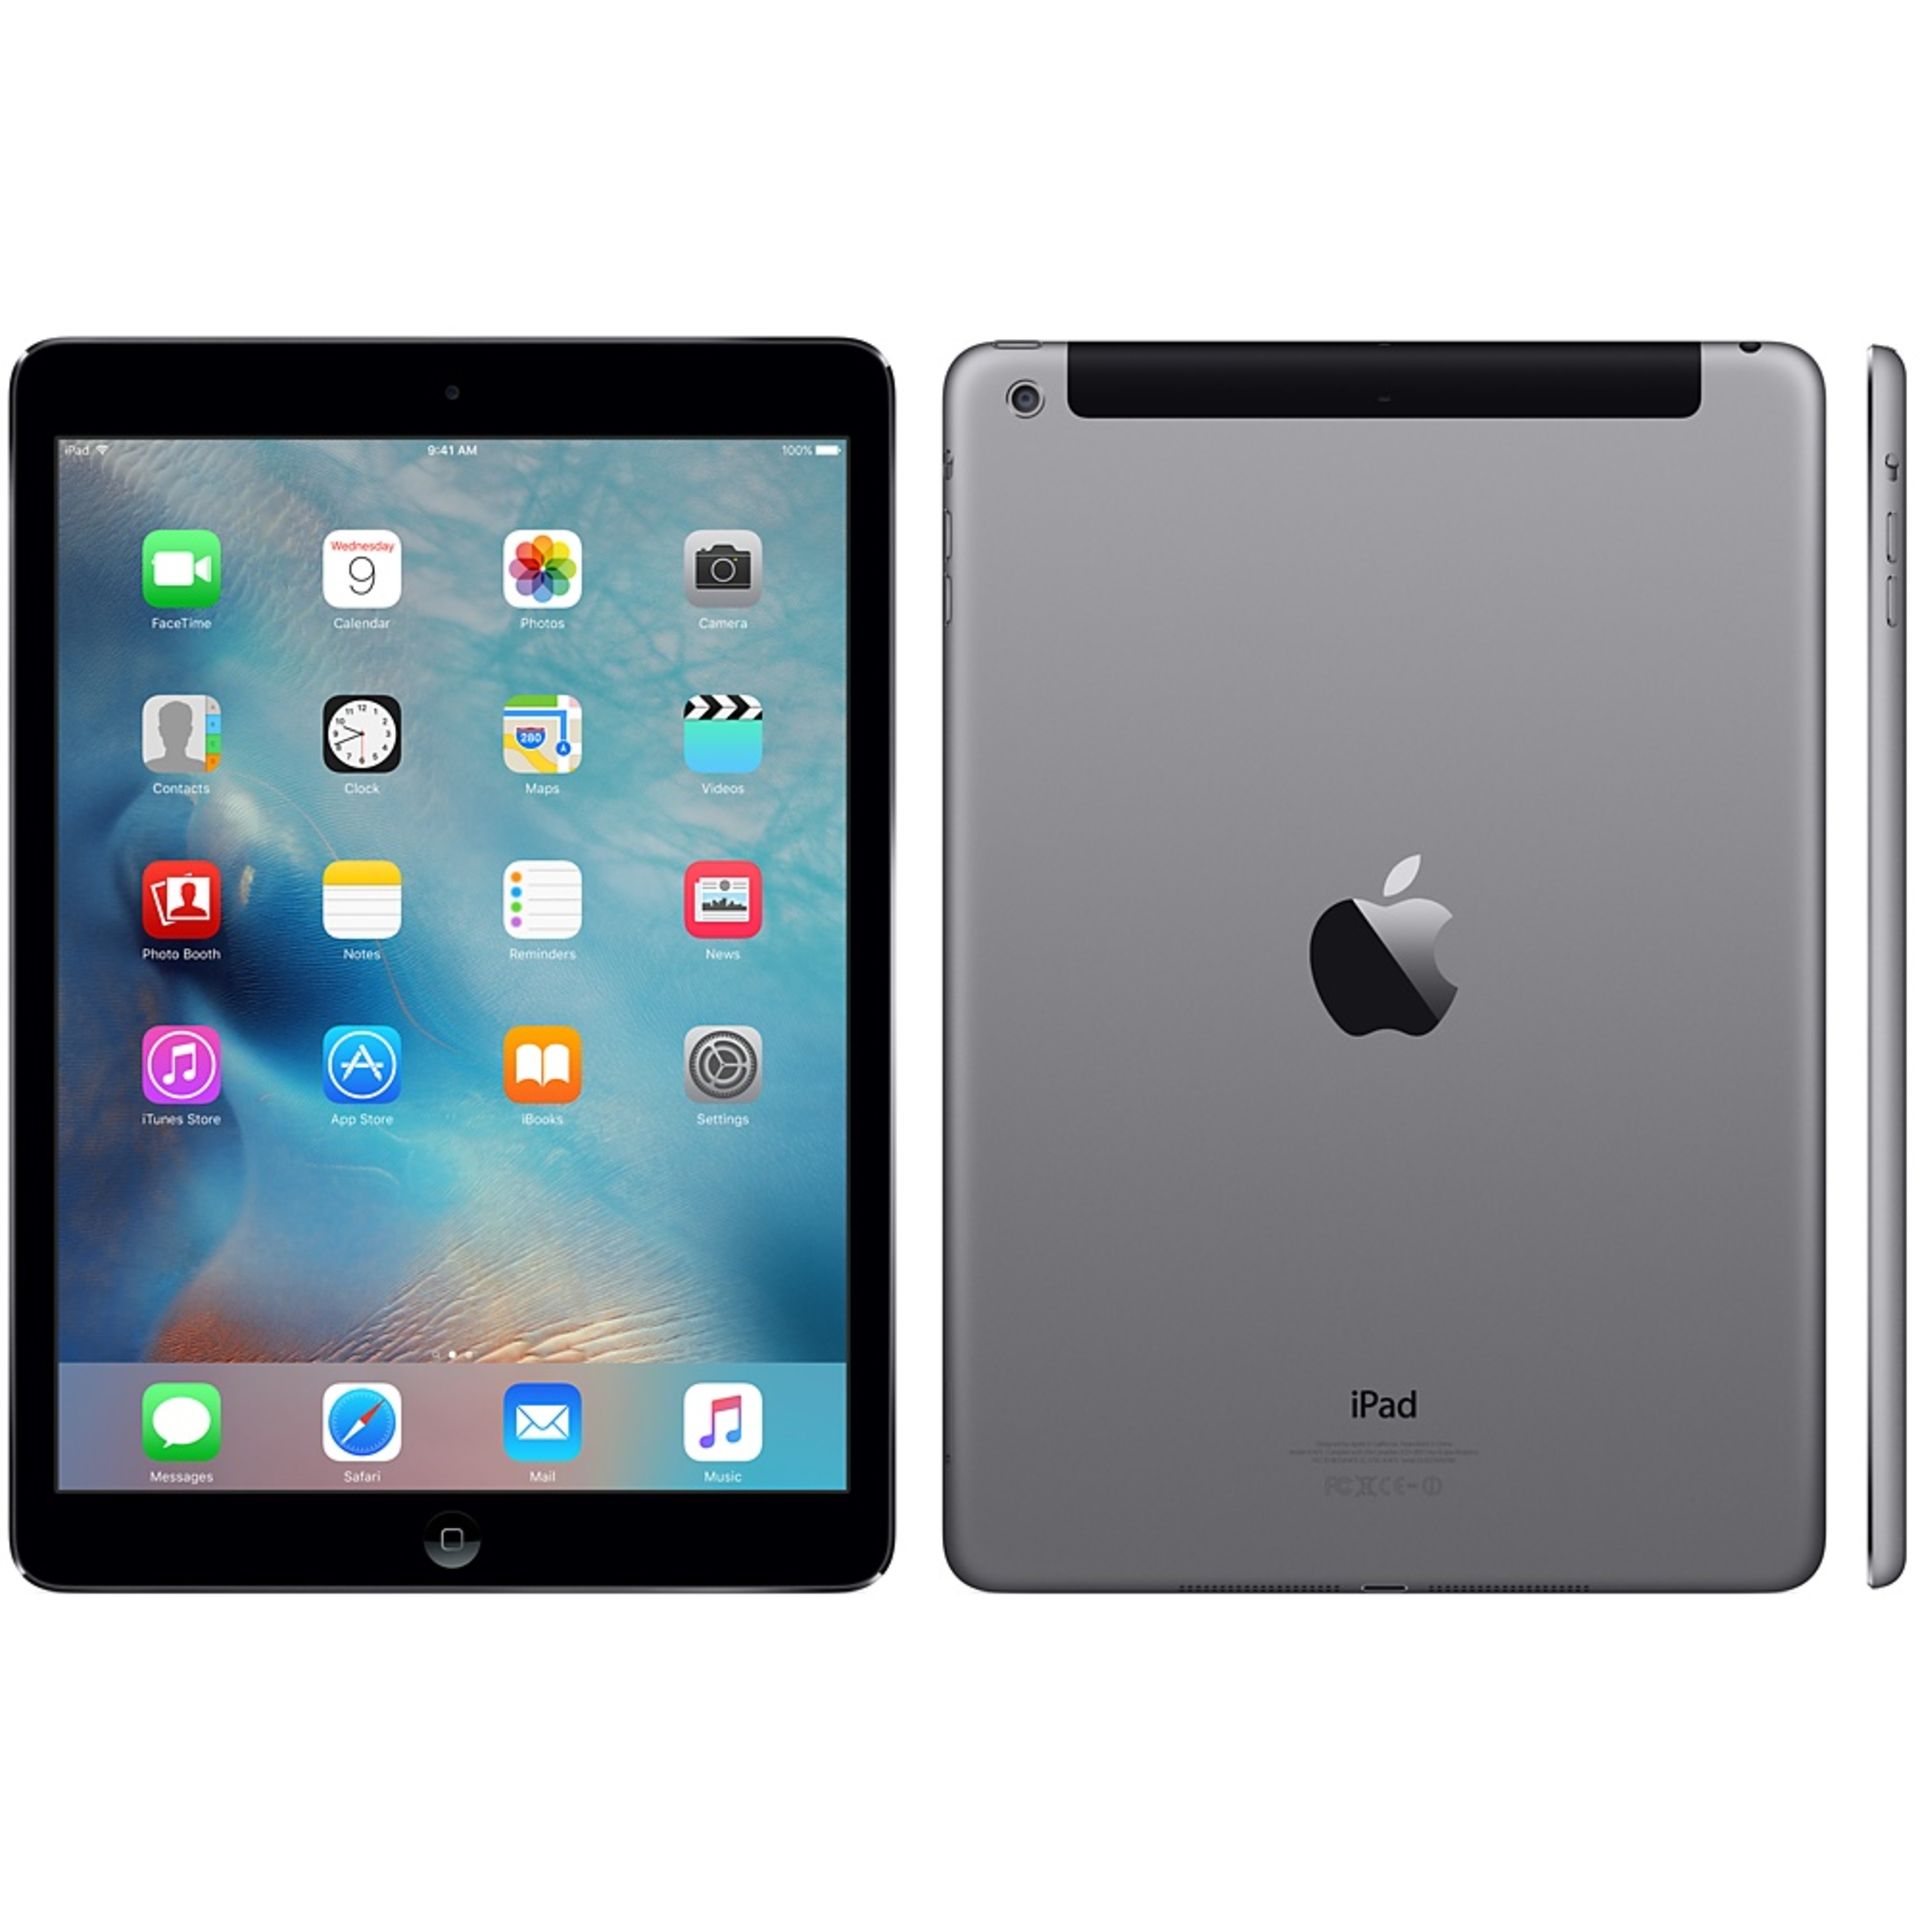 V Grade A/B Apple iPad Air 16GB with 4G and Wi-Fi - Space Grey - Generic Box